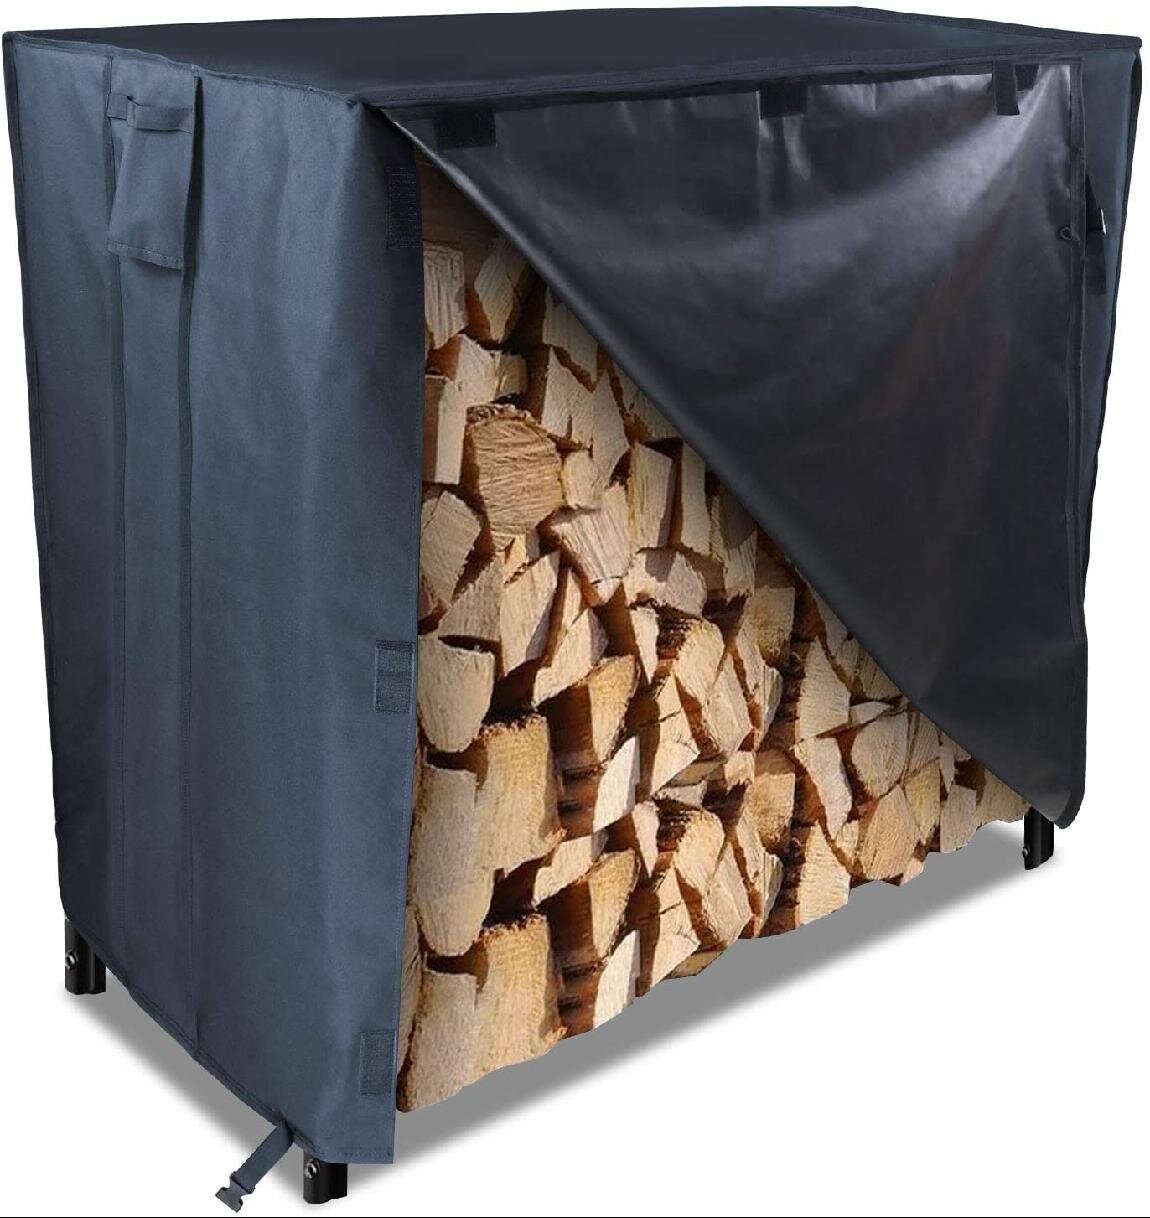 4ft Outdoor Waterproof Firewood Rack Log Full Cover Heavy Duty Dust Protector